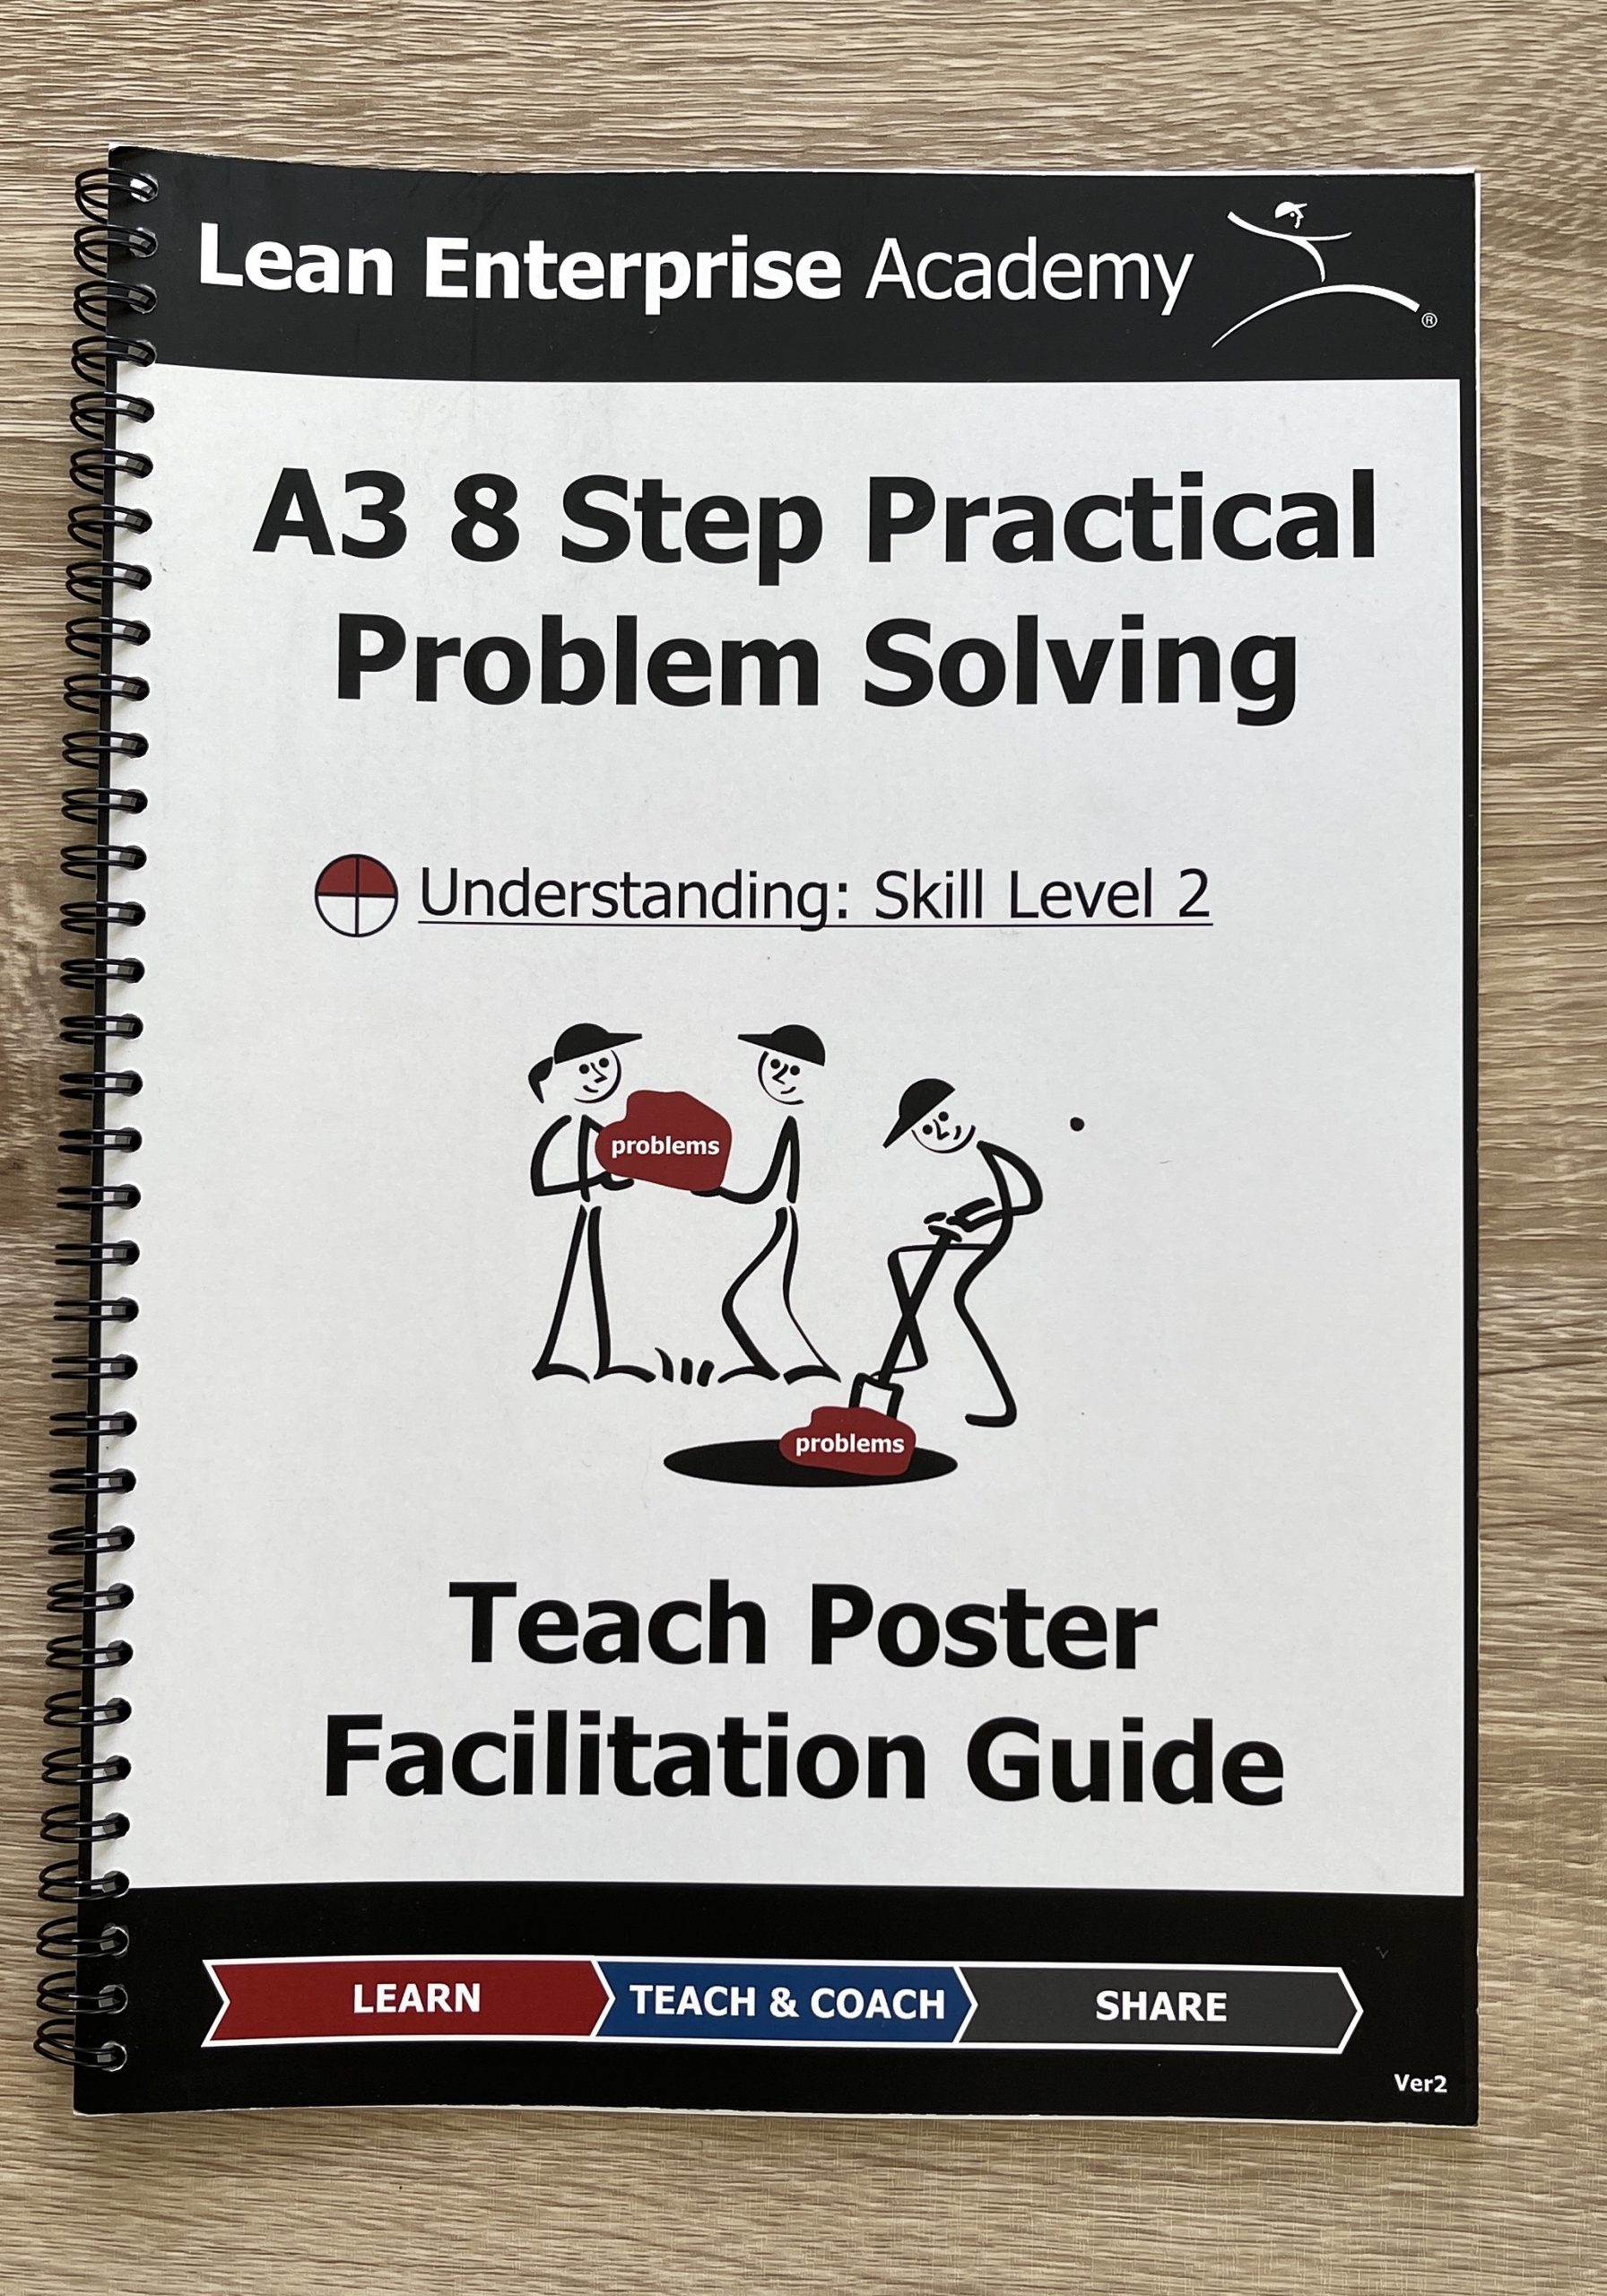 a3 8 step practical problem solving facilitation guide